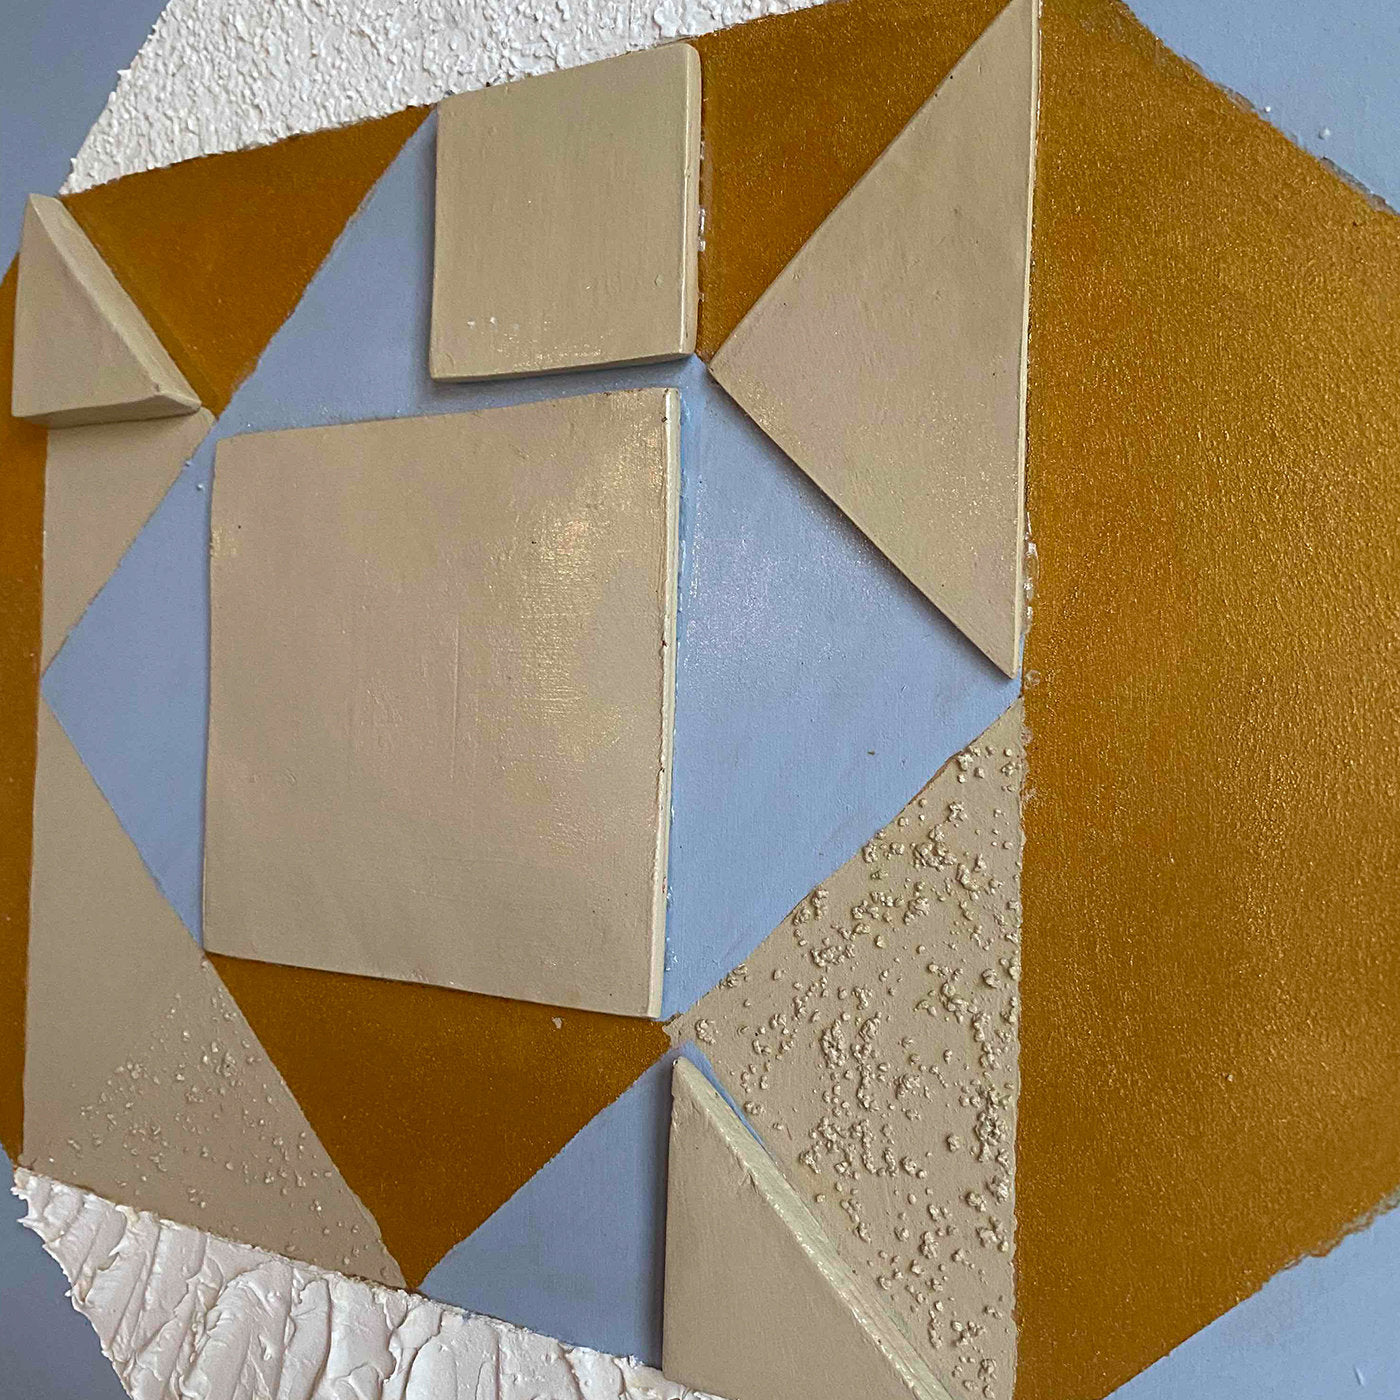 Ziggurat Decorative Panel and Shelf by Mascia Meccani - Alternative view 4